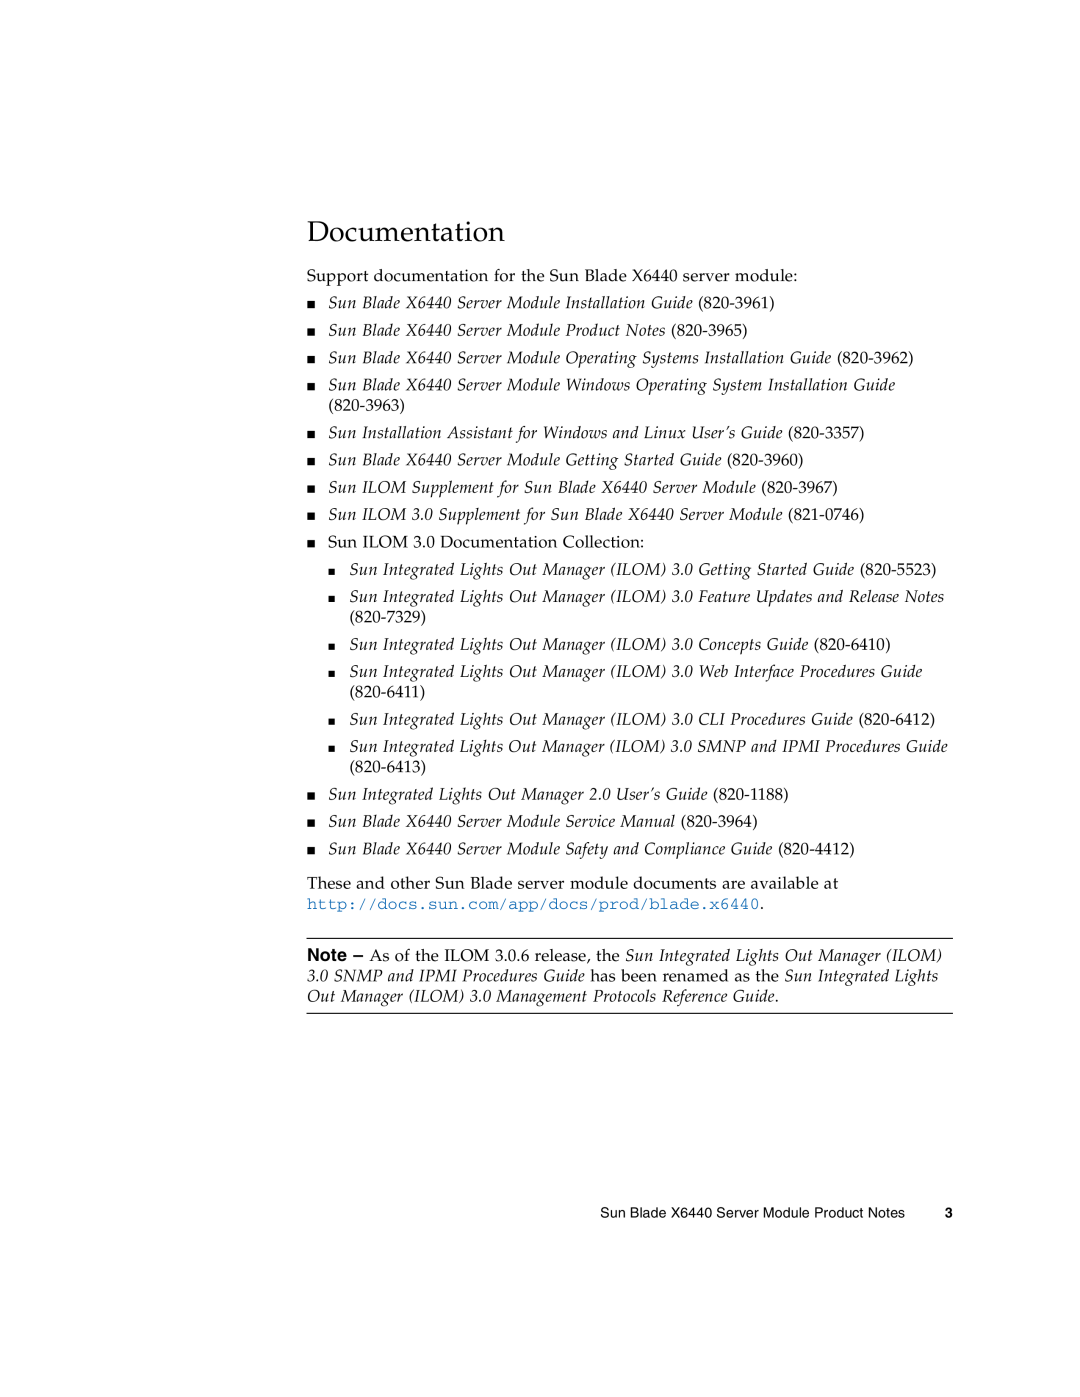 Sun Microsystems manual Documentation, Support documentation for the Sun Blade X6440 server module 